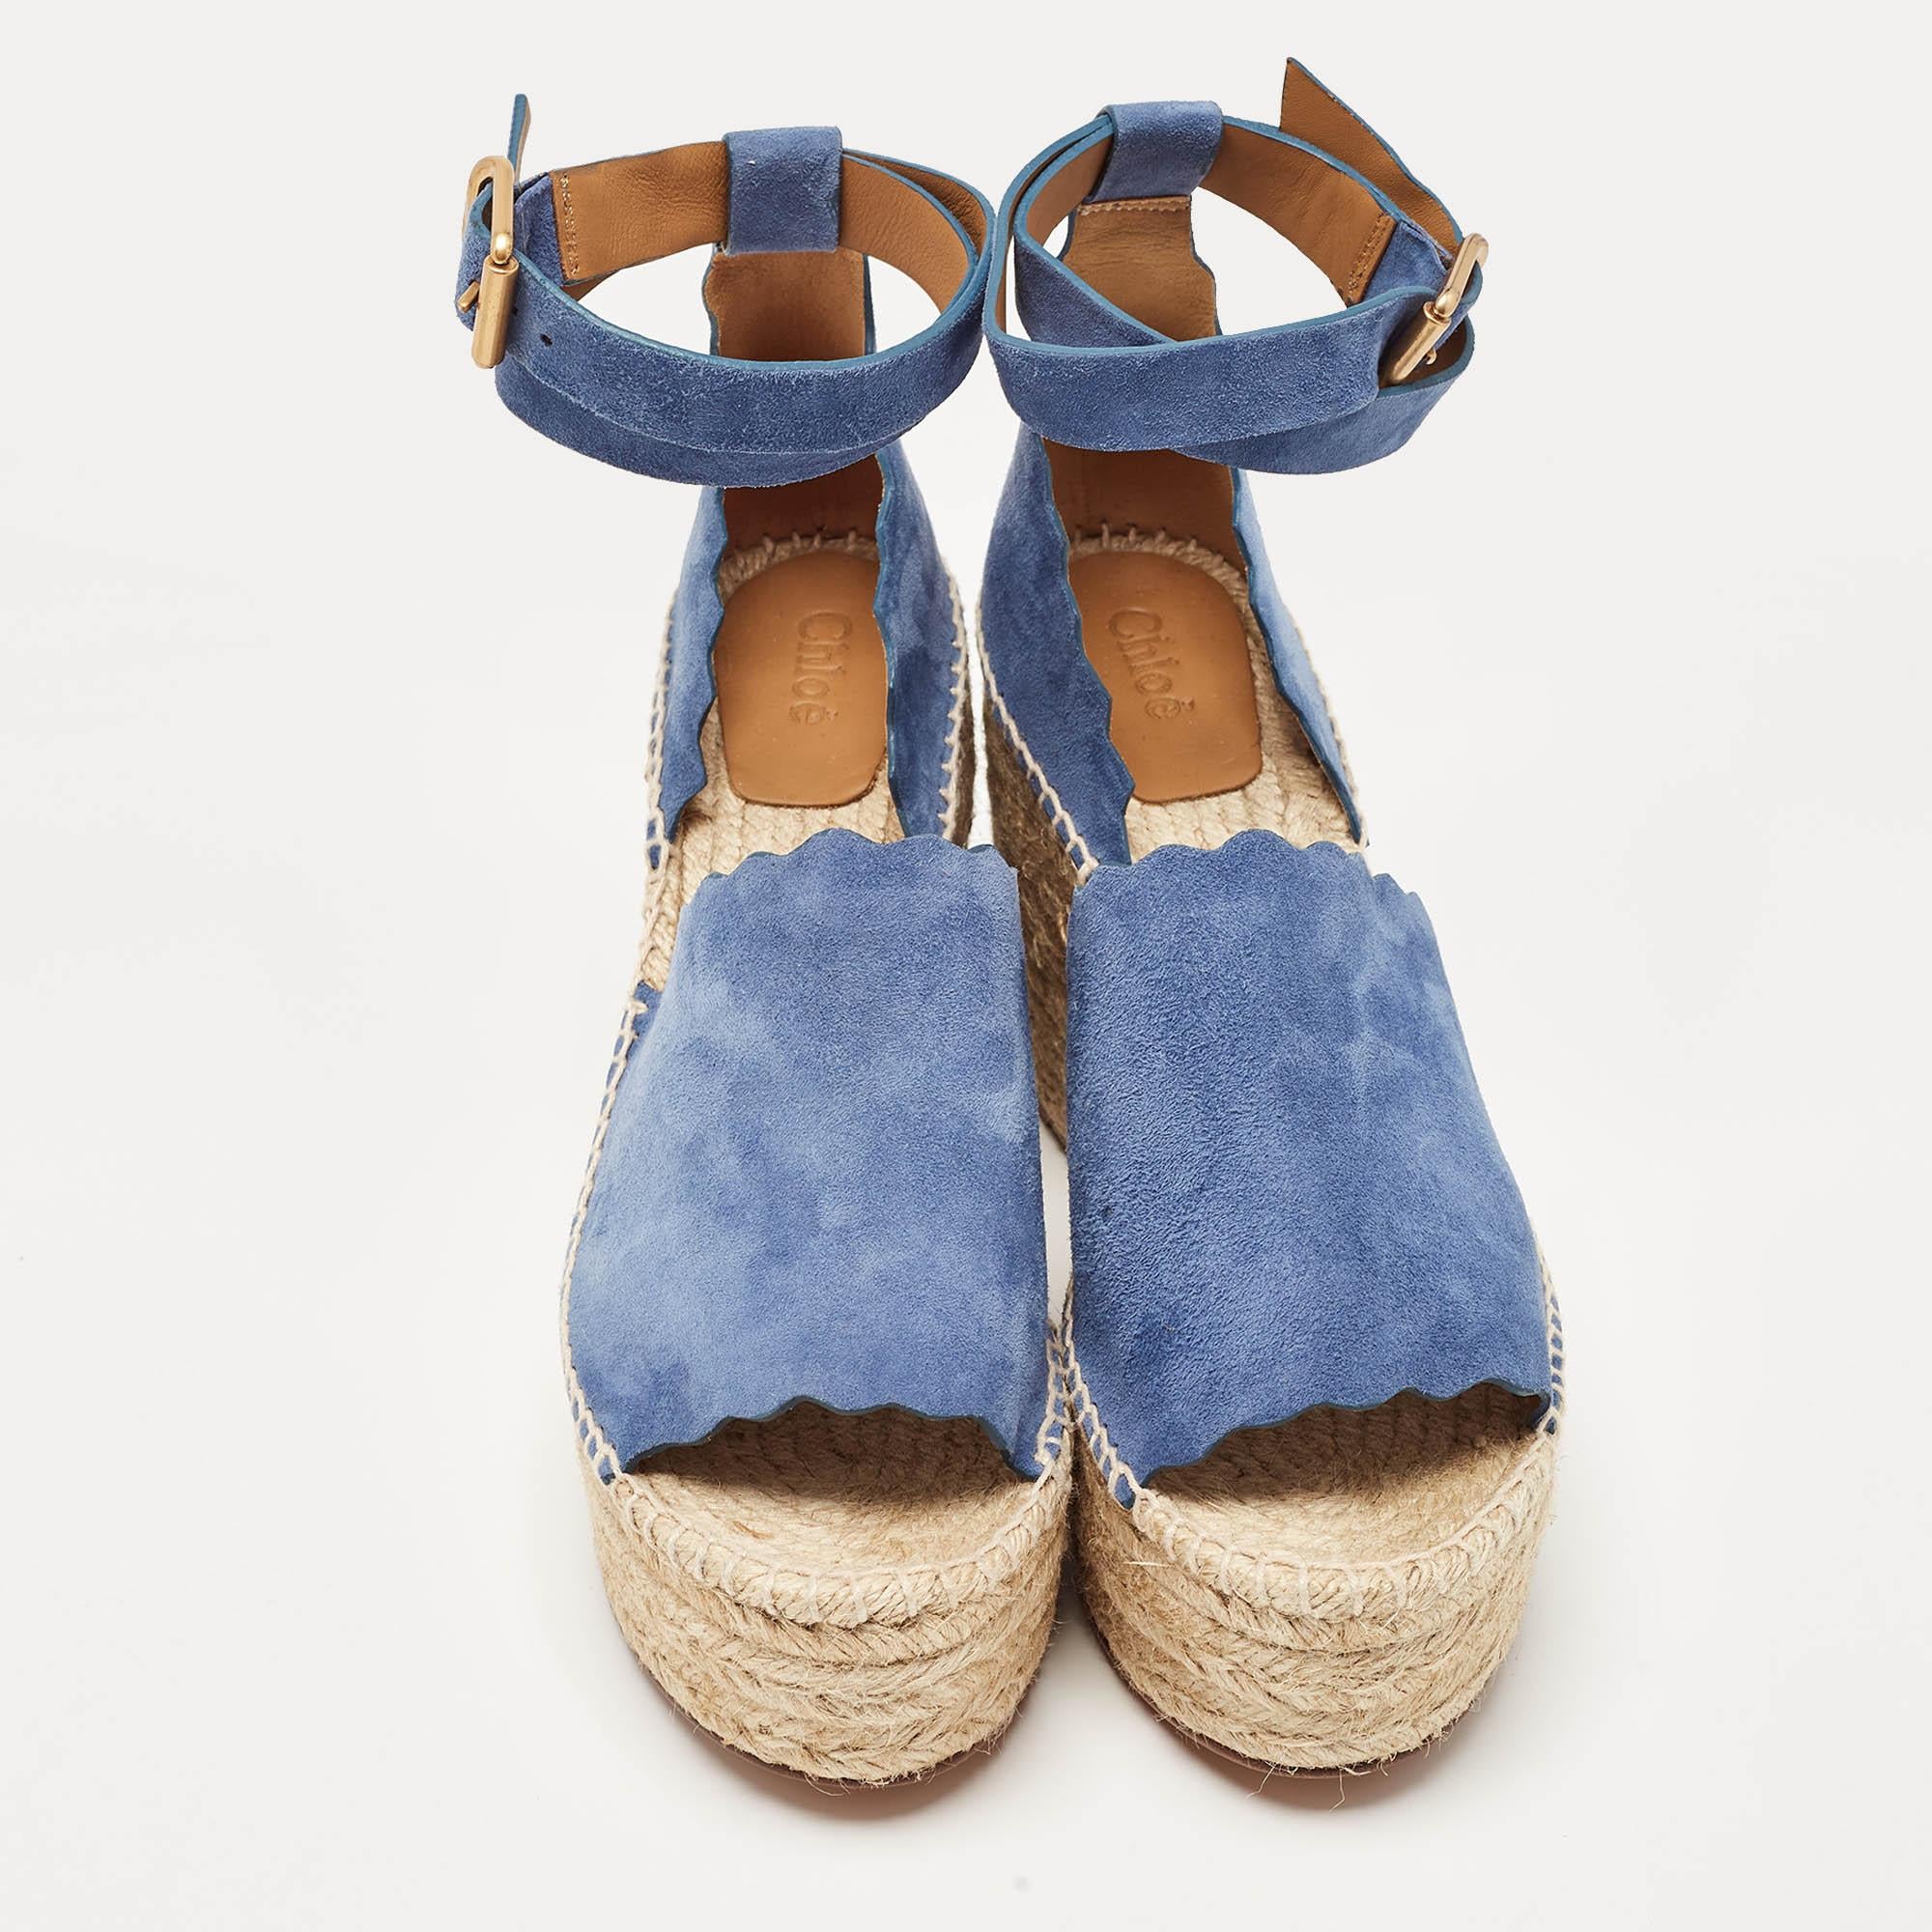 Chloe Blue Suede Lauren Wedge Espadrille Sandals Size 41 In New Condition For Sale In Dubai, Al Qouz 2